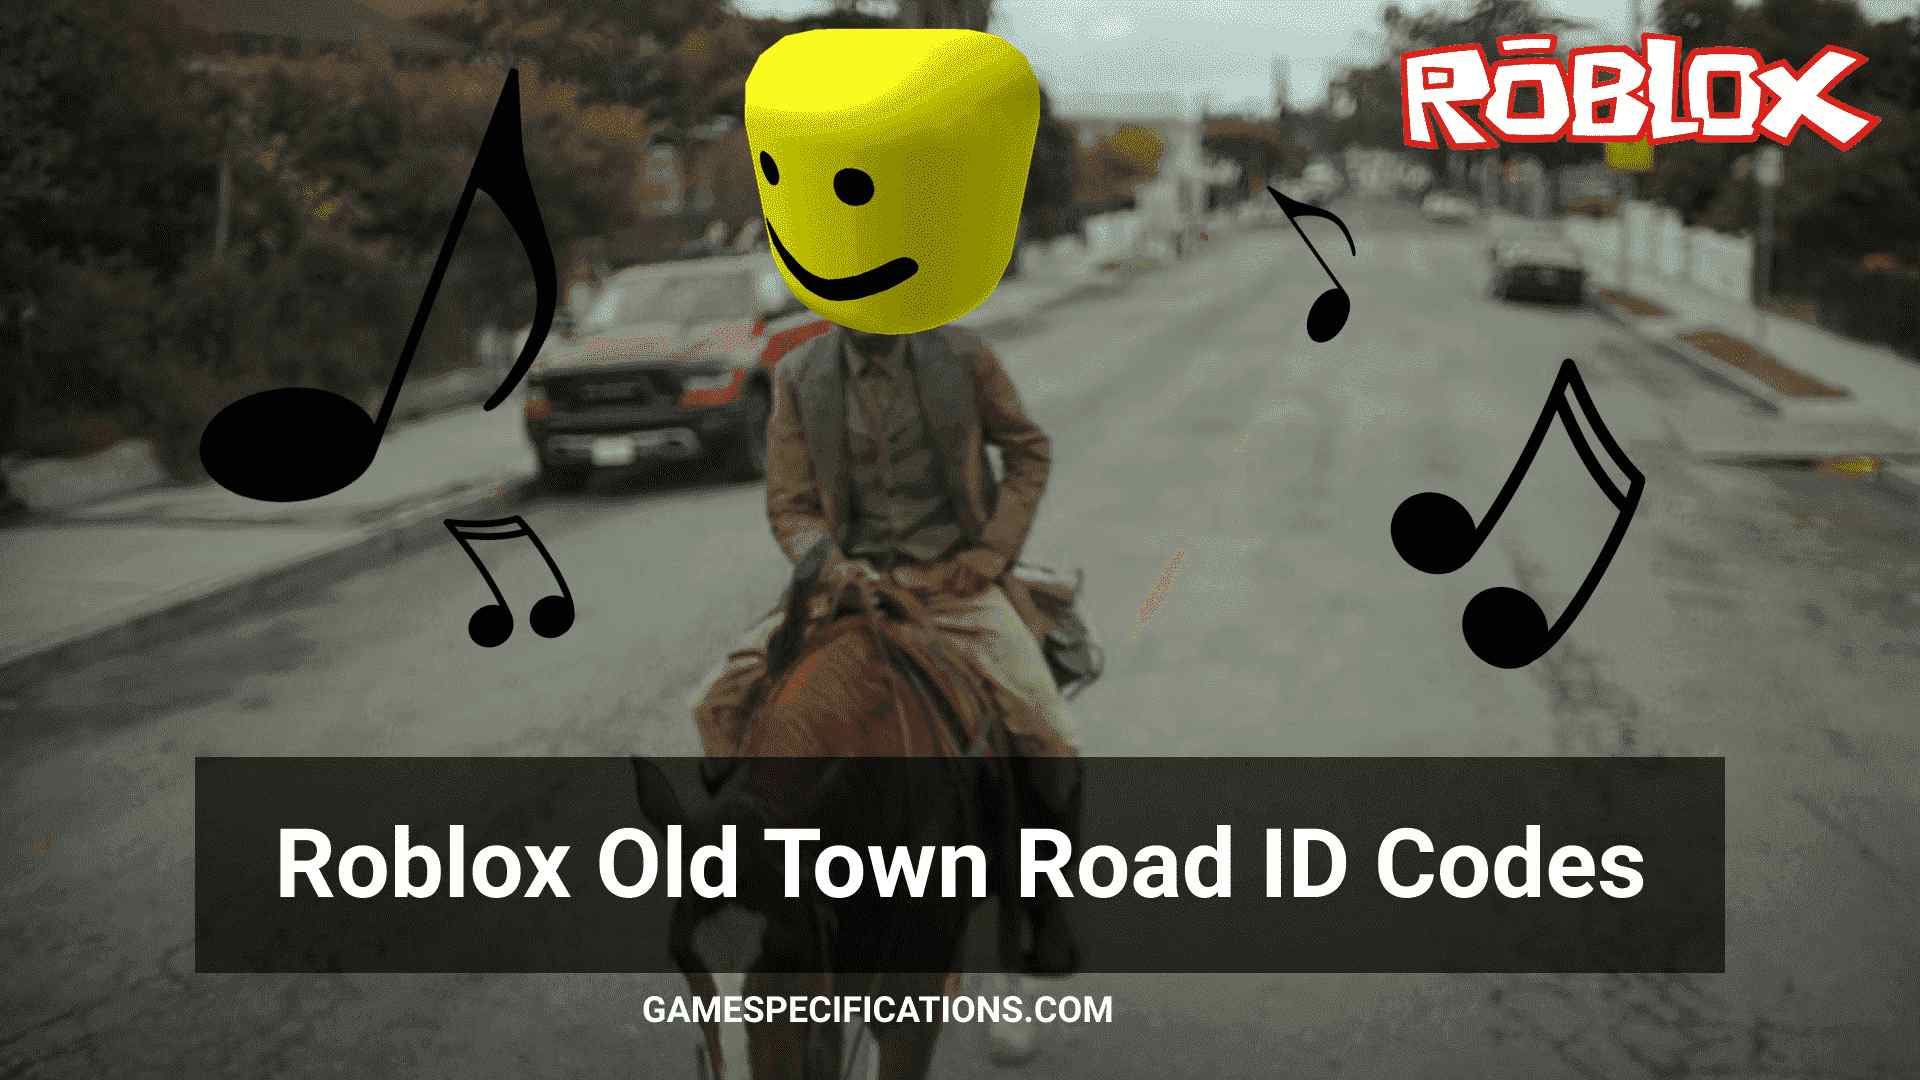 Ohtbreqjb6zwm - old town road roblox radio id